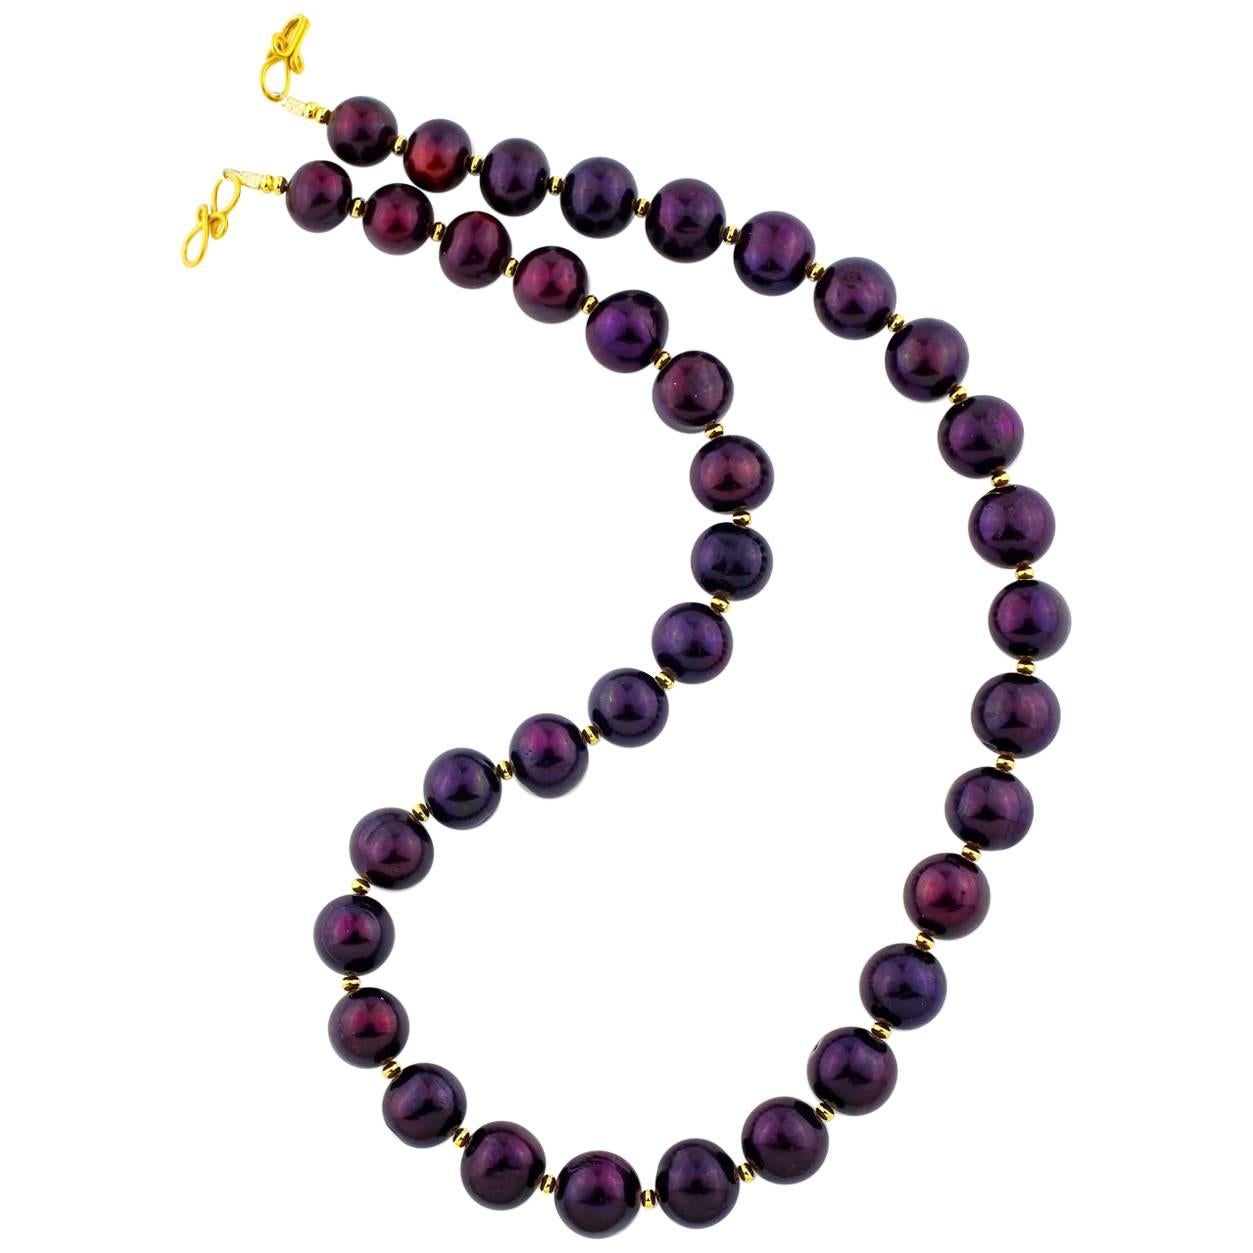 Brilliant Merlot wine red Pearls Necklace